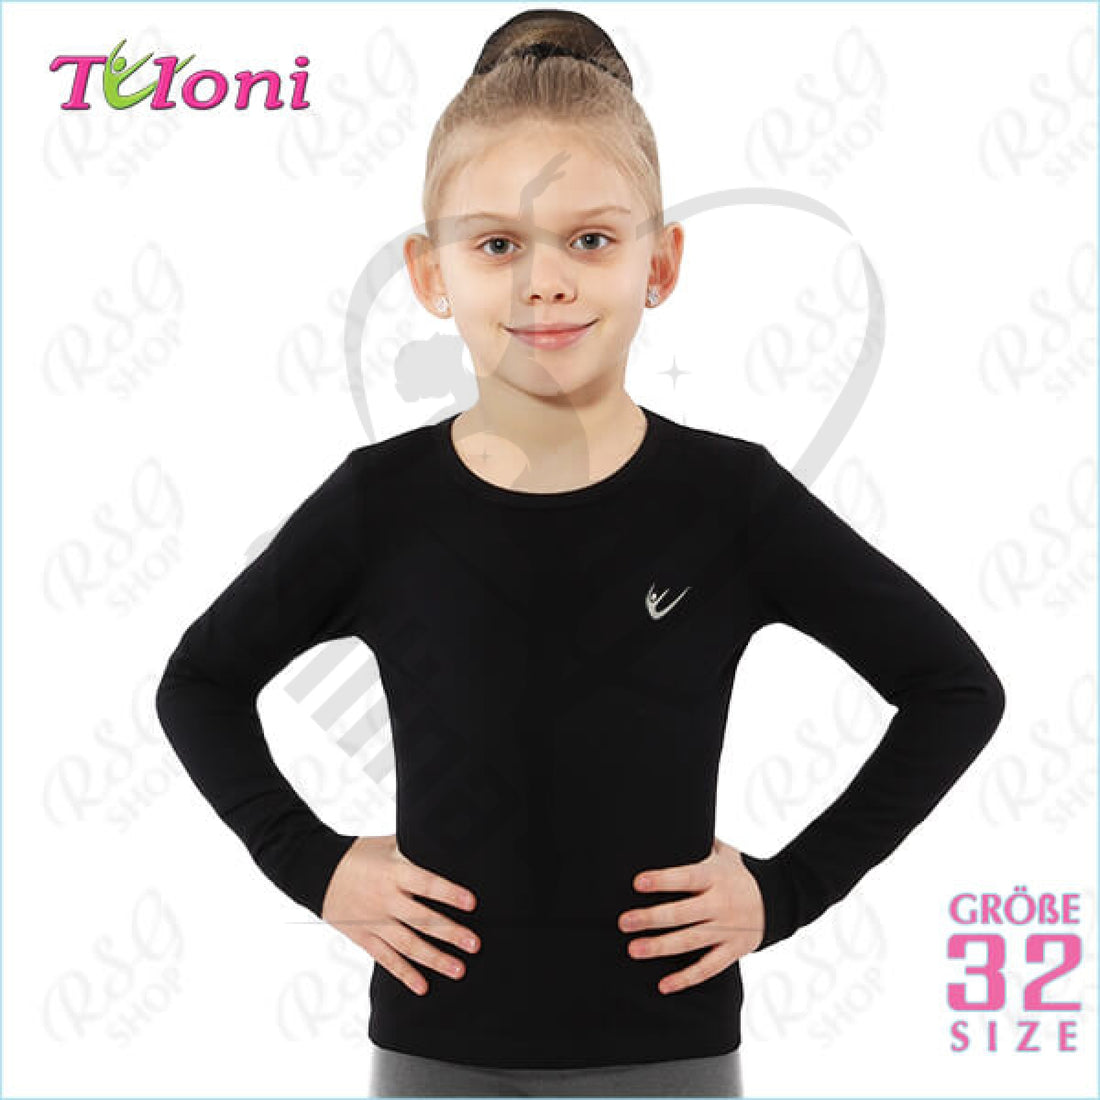 Tuloni Long Sleeve Top 32 (116-122) T Shirts & Tops